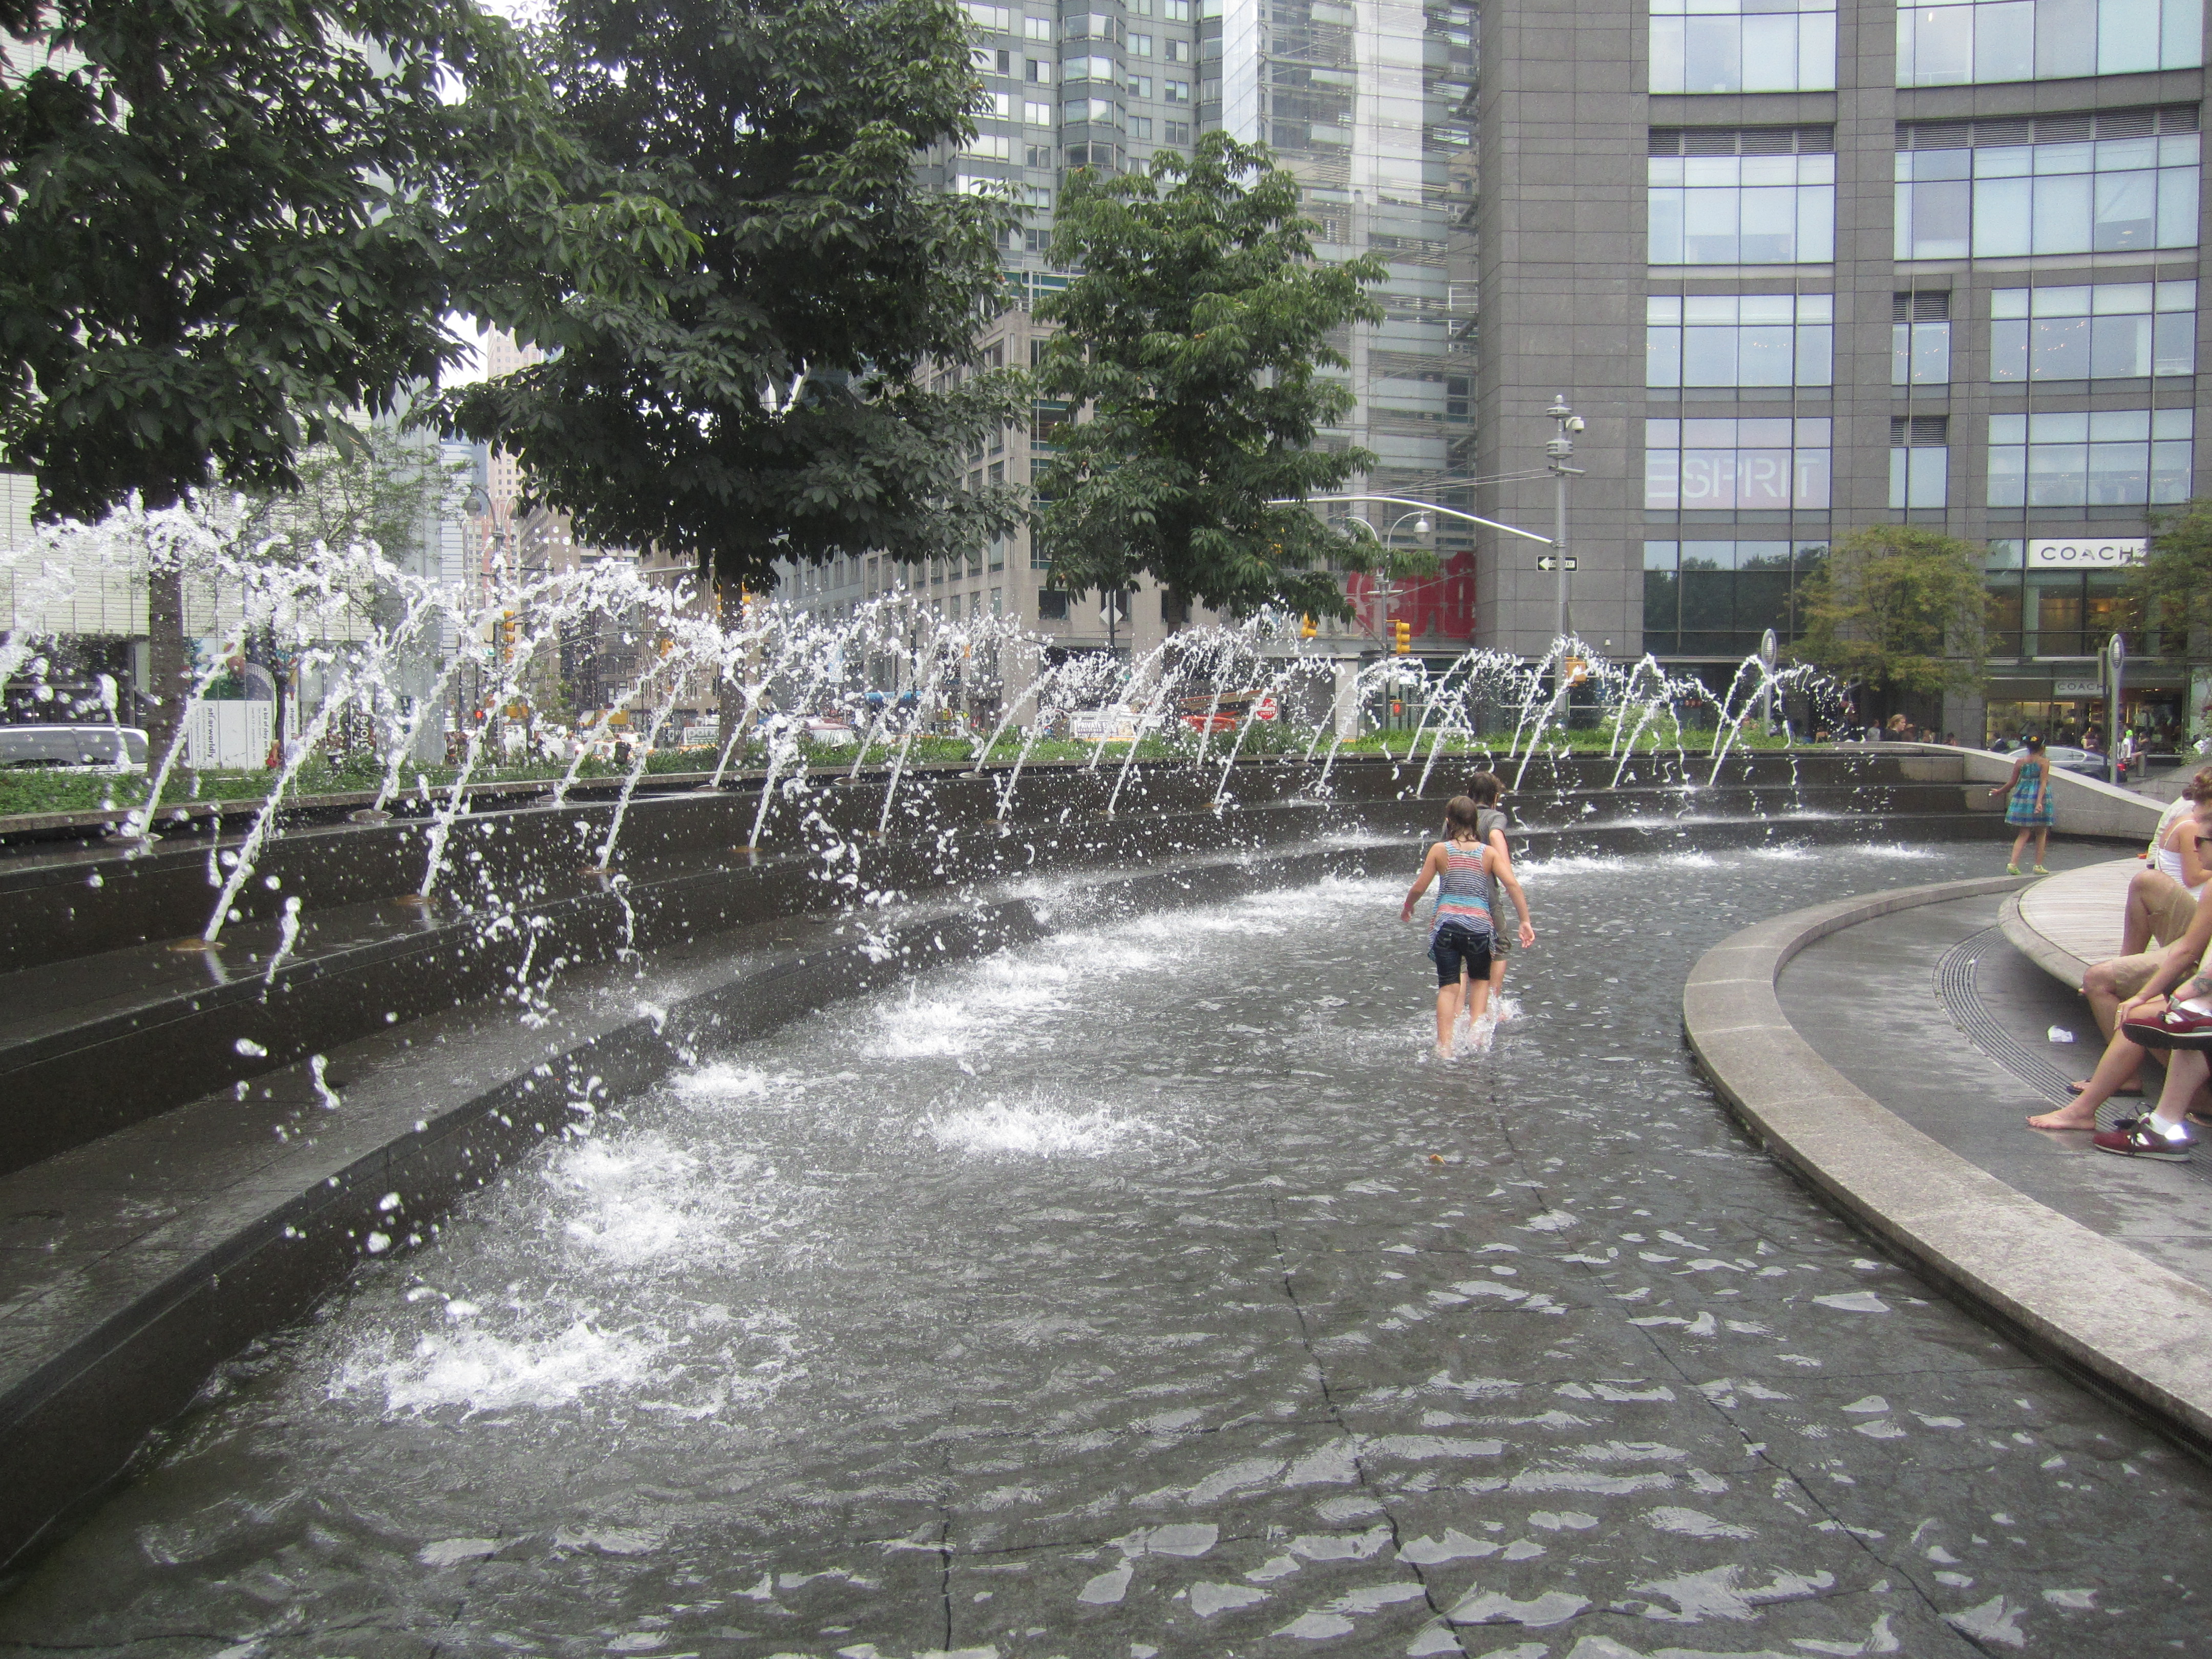 File:Fountain near Columbus Circle, NYC IMG 3961.JPG - Wikimedia Commons